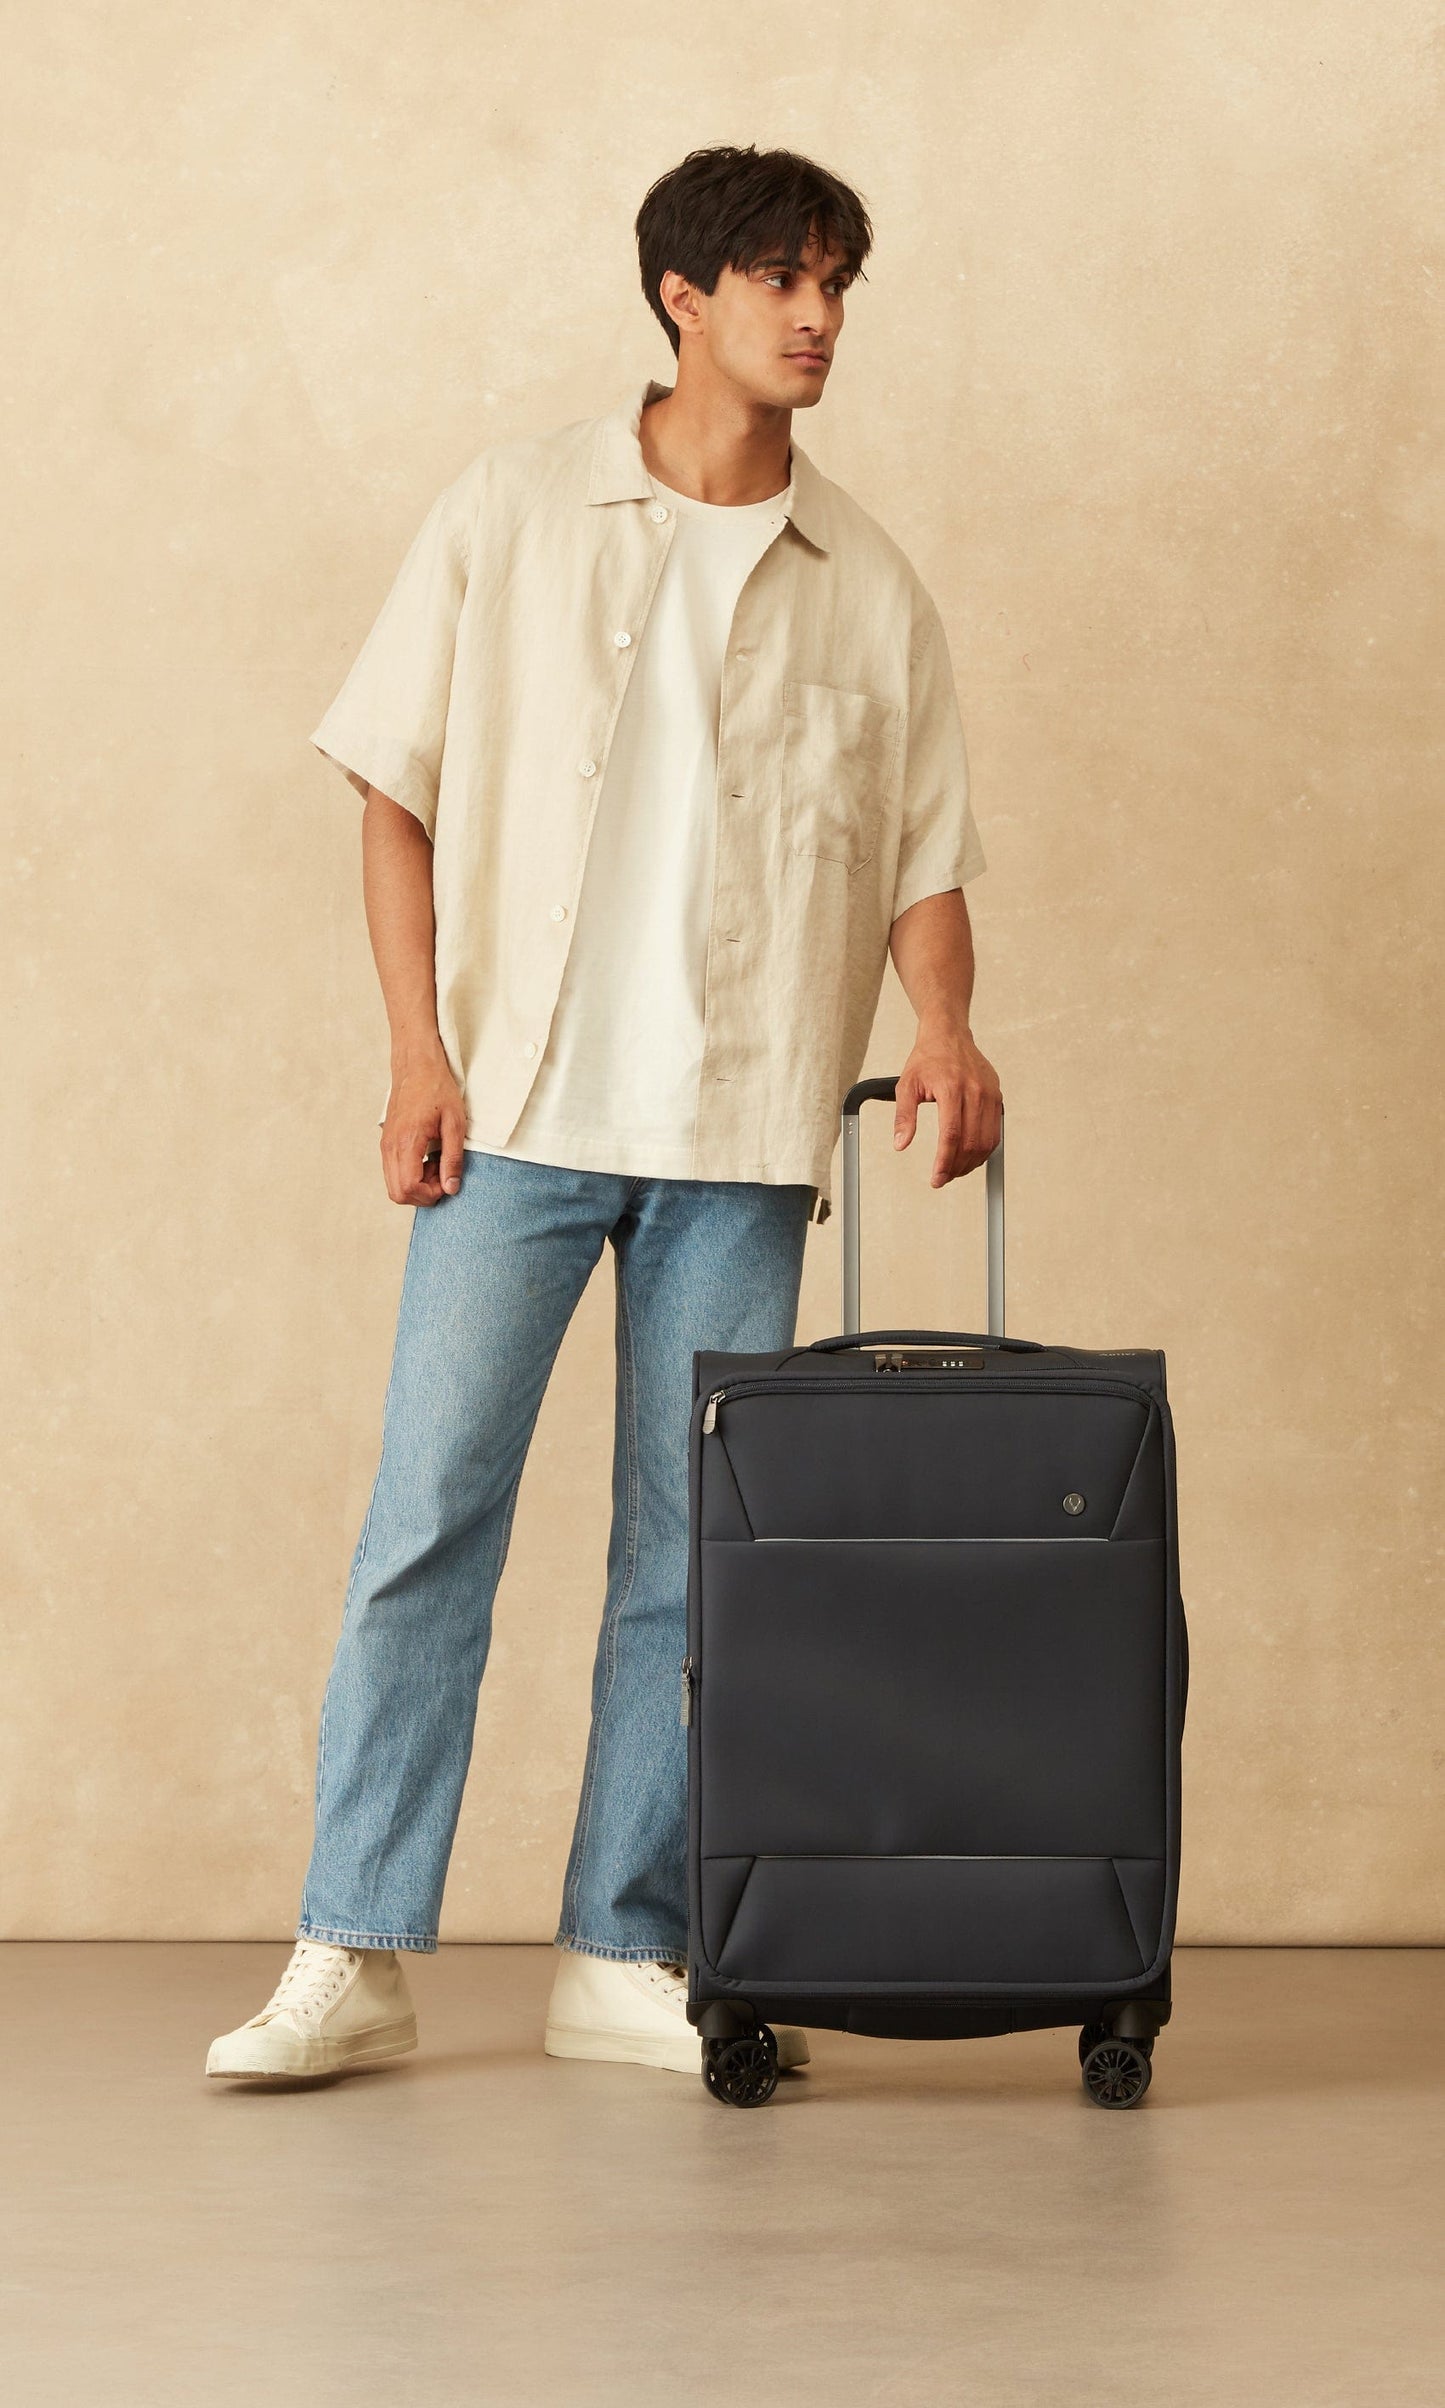 Antler Luggage -  Brixham medium in navy - Soft Suitcases Brixham Medium Suitcase Navy | Soft Shell Suitcase | Antler 